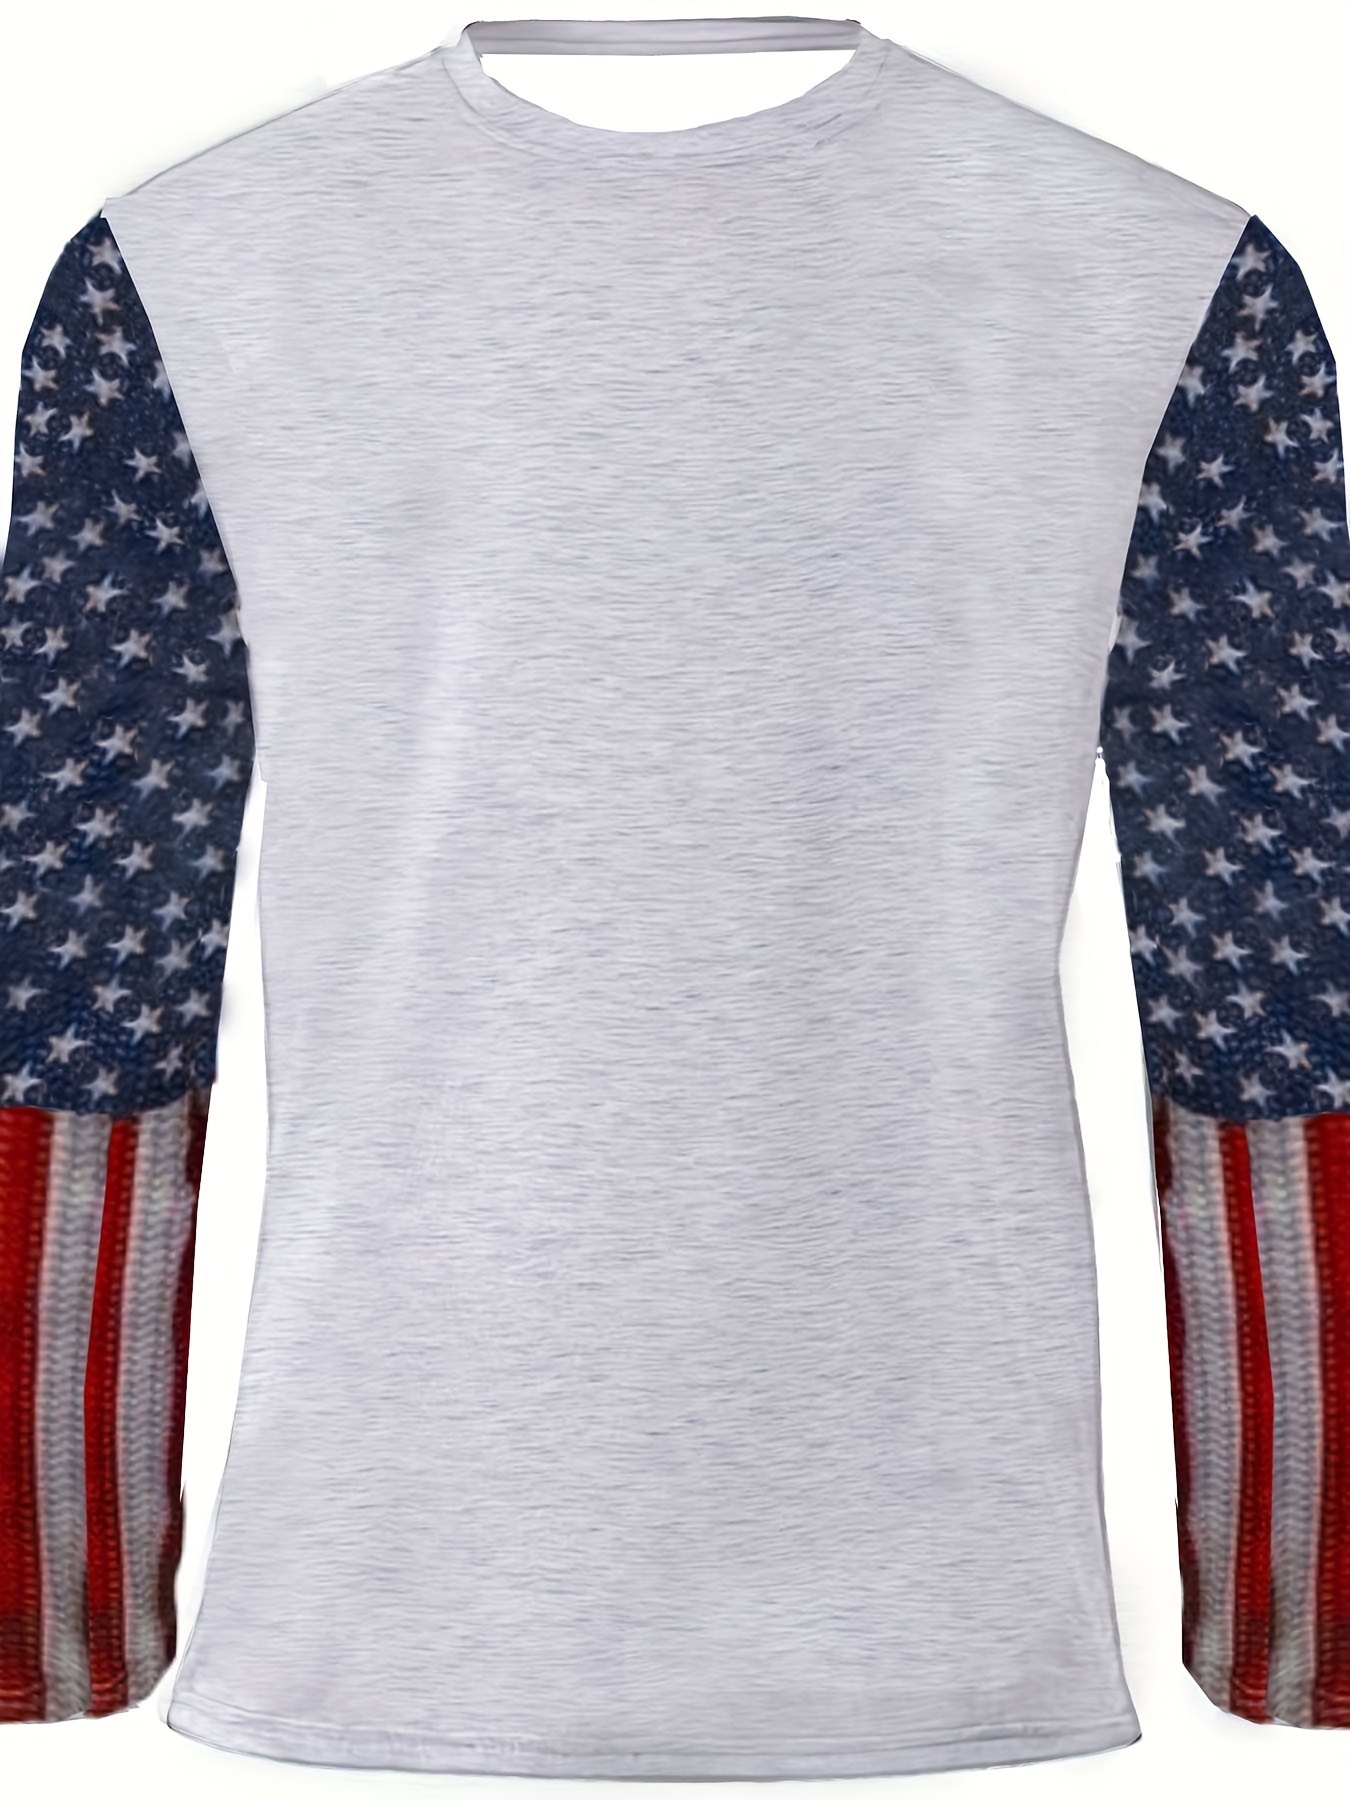 Ice Fishing T-shirt with American Flag, Ice Fishing Shirt, Fishing